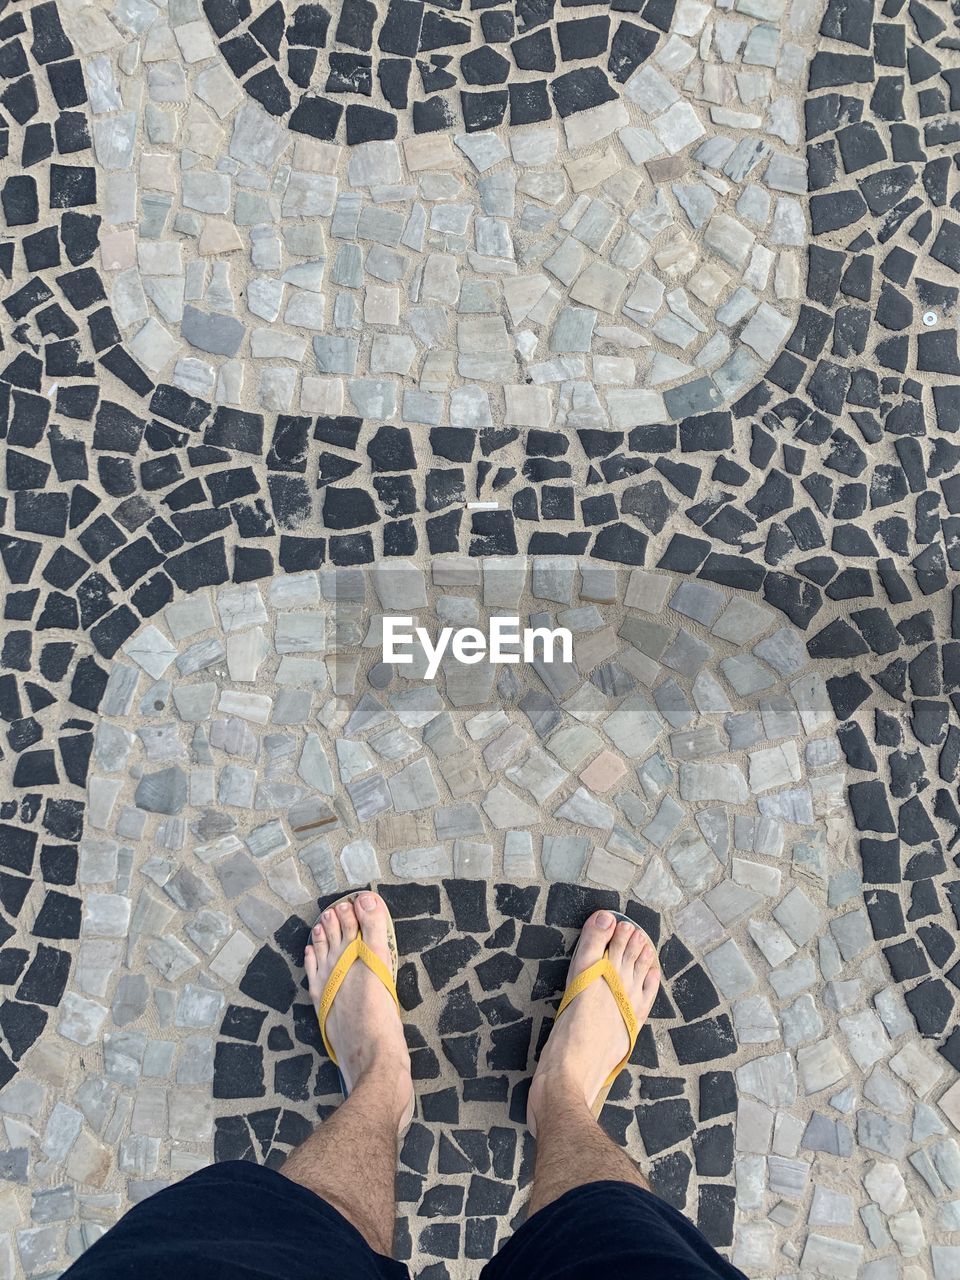 Standing on the ipanema beach cobblestone pattern